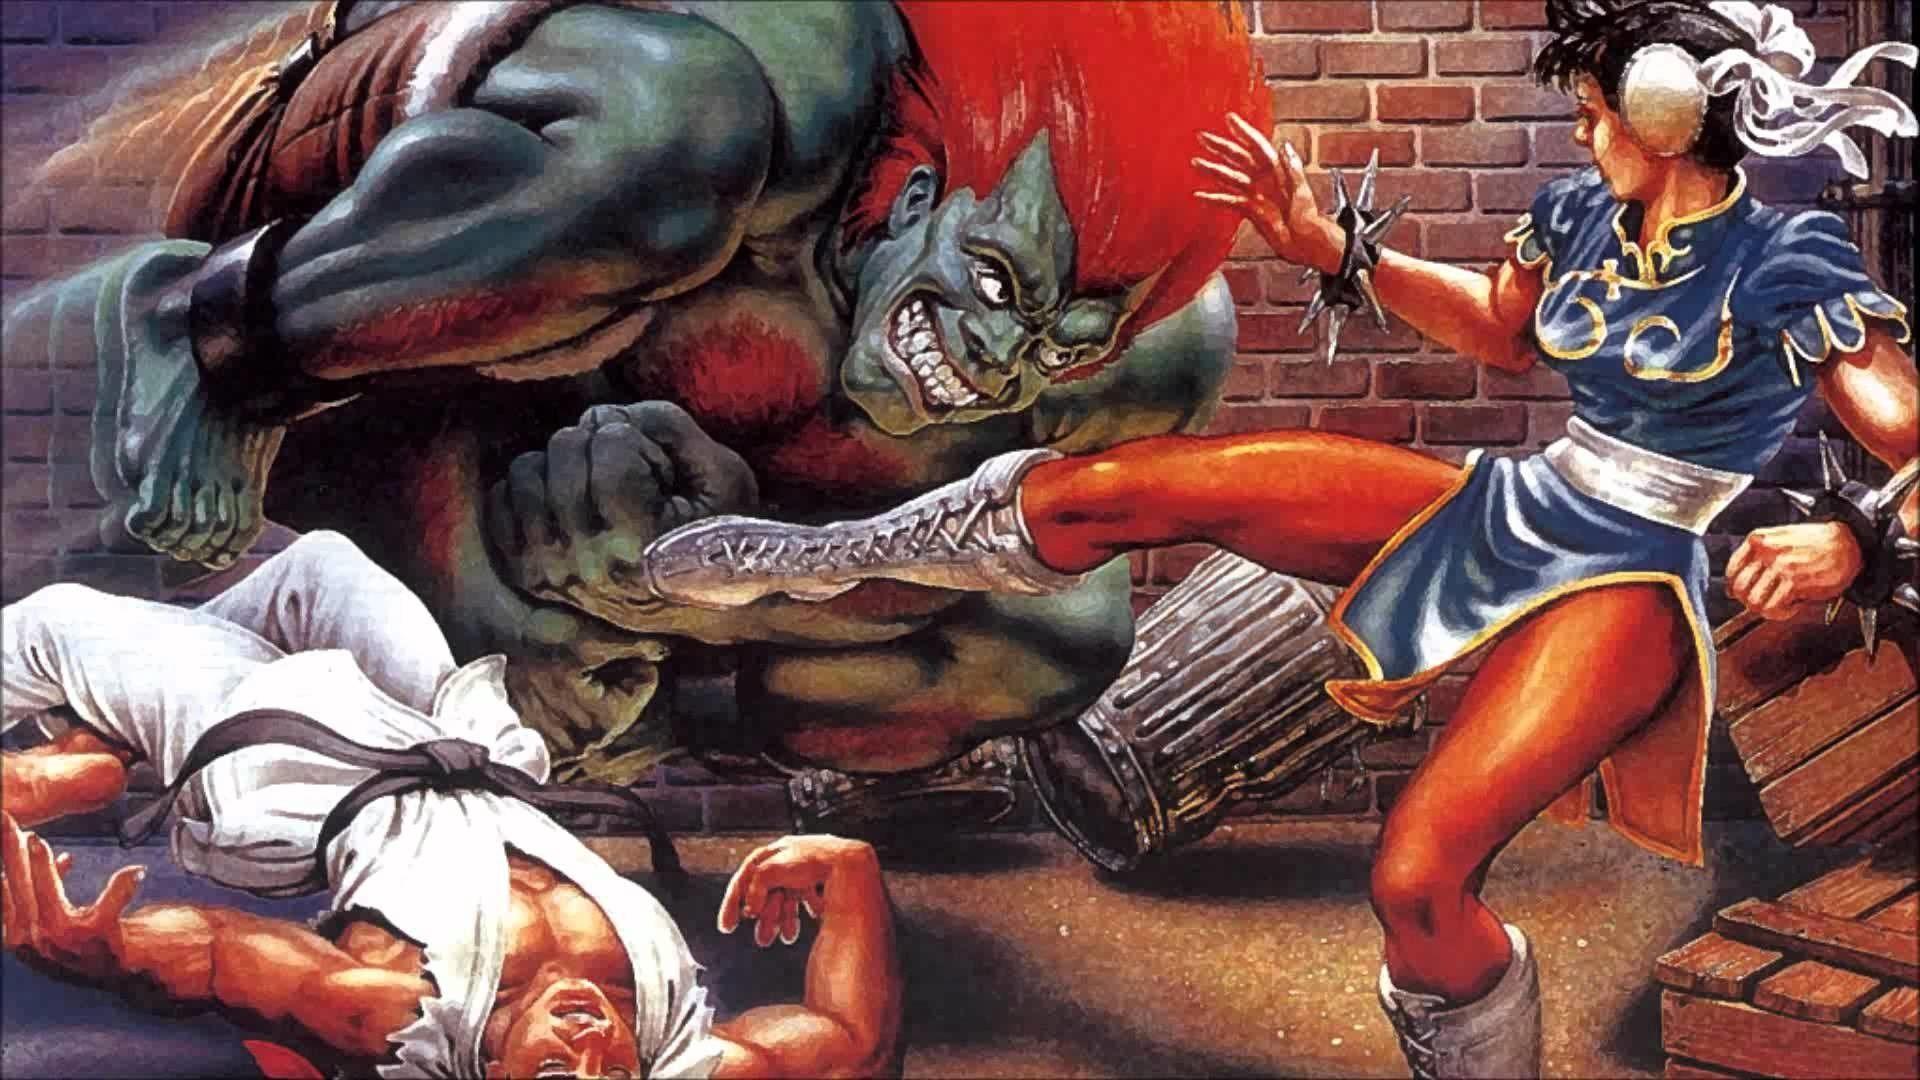 Super Street Fighter 2 Turbo Akuma Playable in the Anniversary